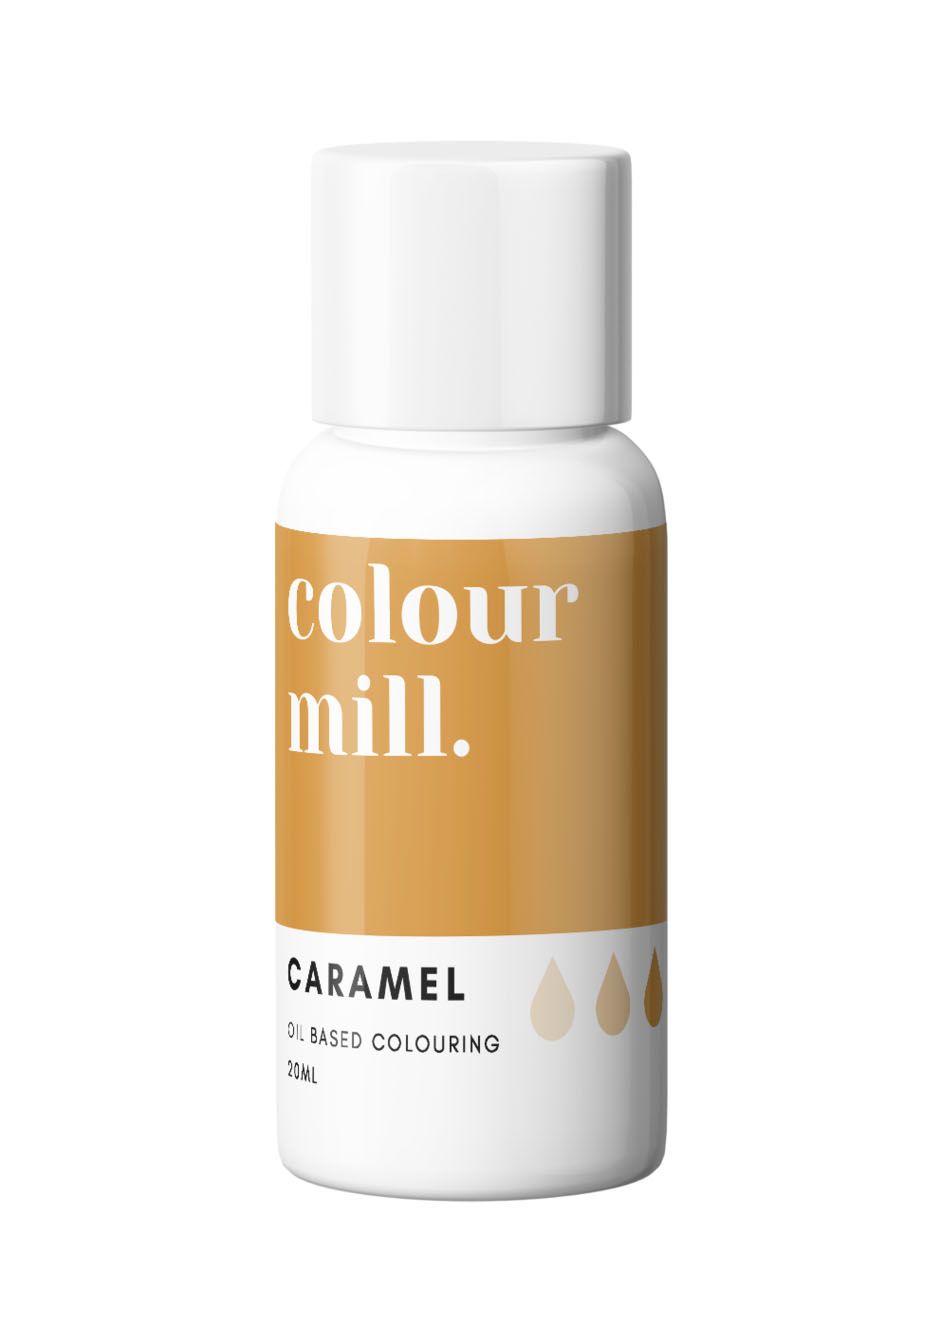 Colour Mill Caramel Colouring 20ml